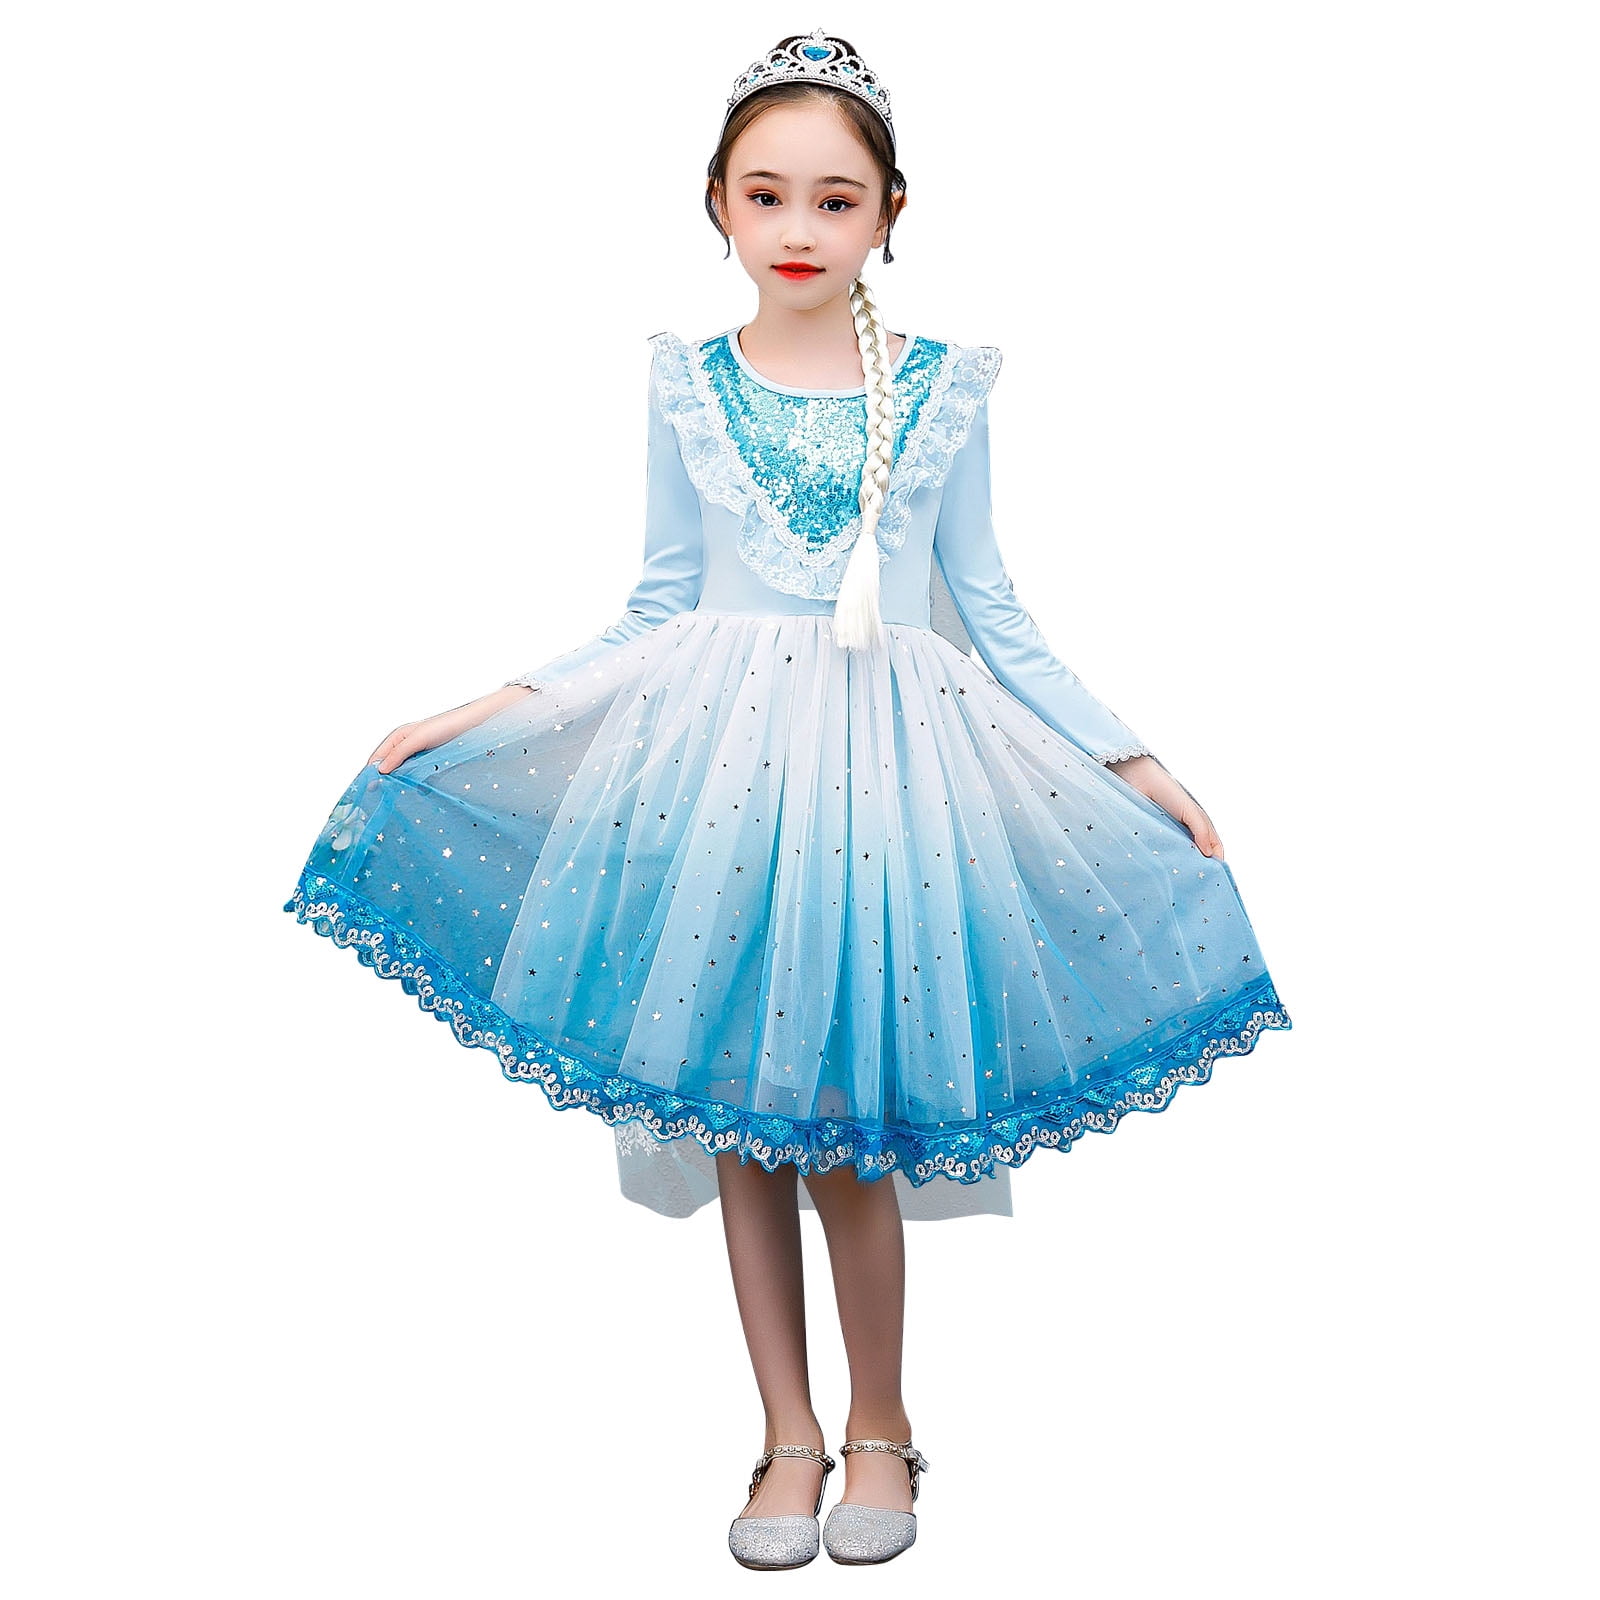 Kids Princess Costume Girls Birthday Party Dress up Toddler Cinderella Cosplay Costume 3-8 Years Blue